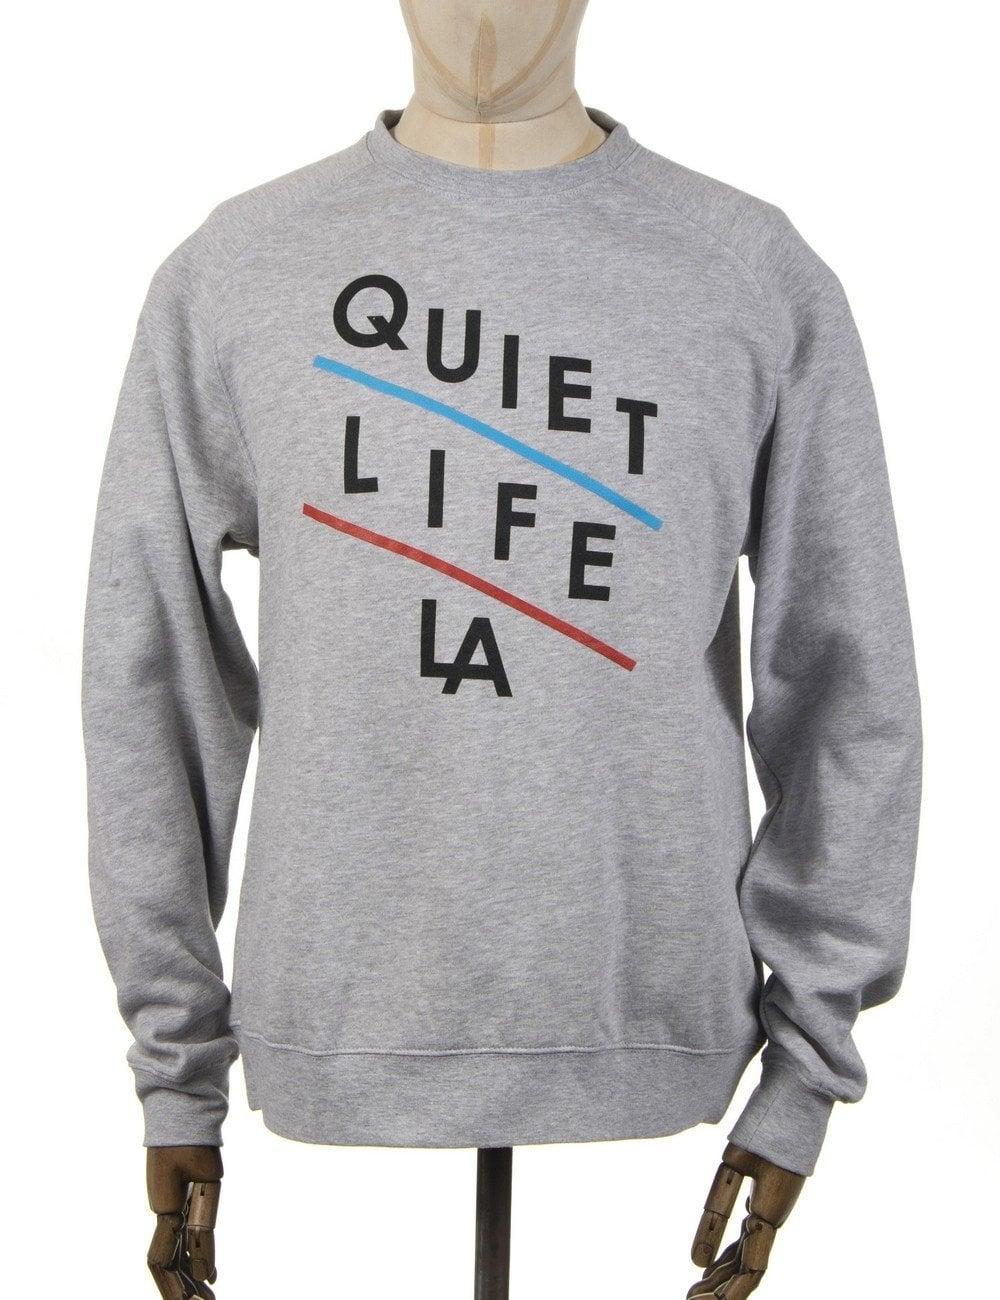 Quiet Life Clothing Logo - The Quiet Life Slant Logo Sweatshirt - Heather Grey - Clothing from ...